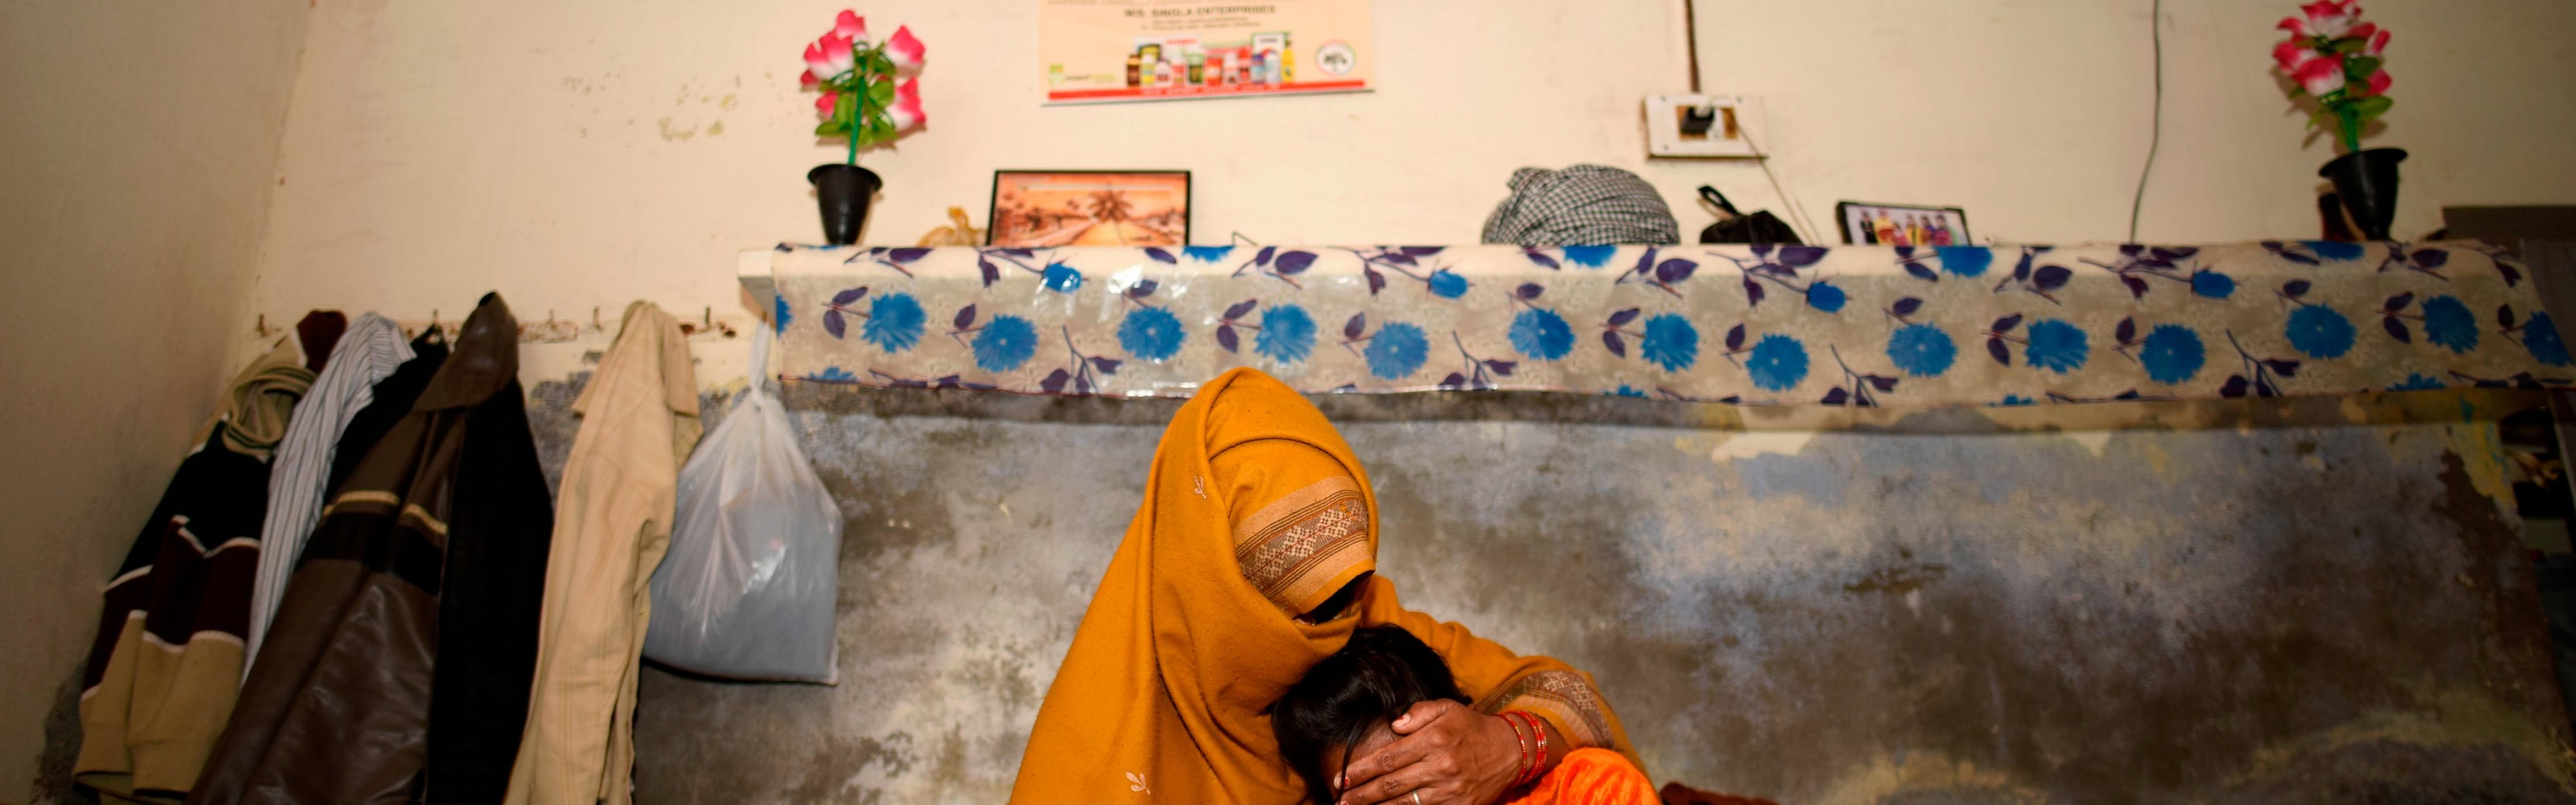 Kannada Rape Sex - String of brutal rapes shocks India | CNN